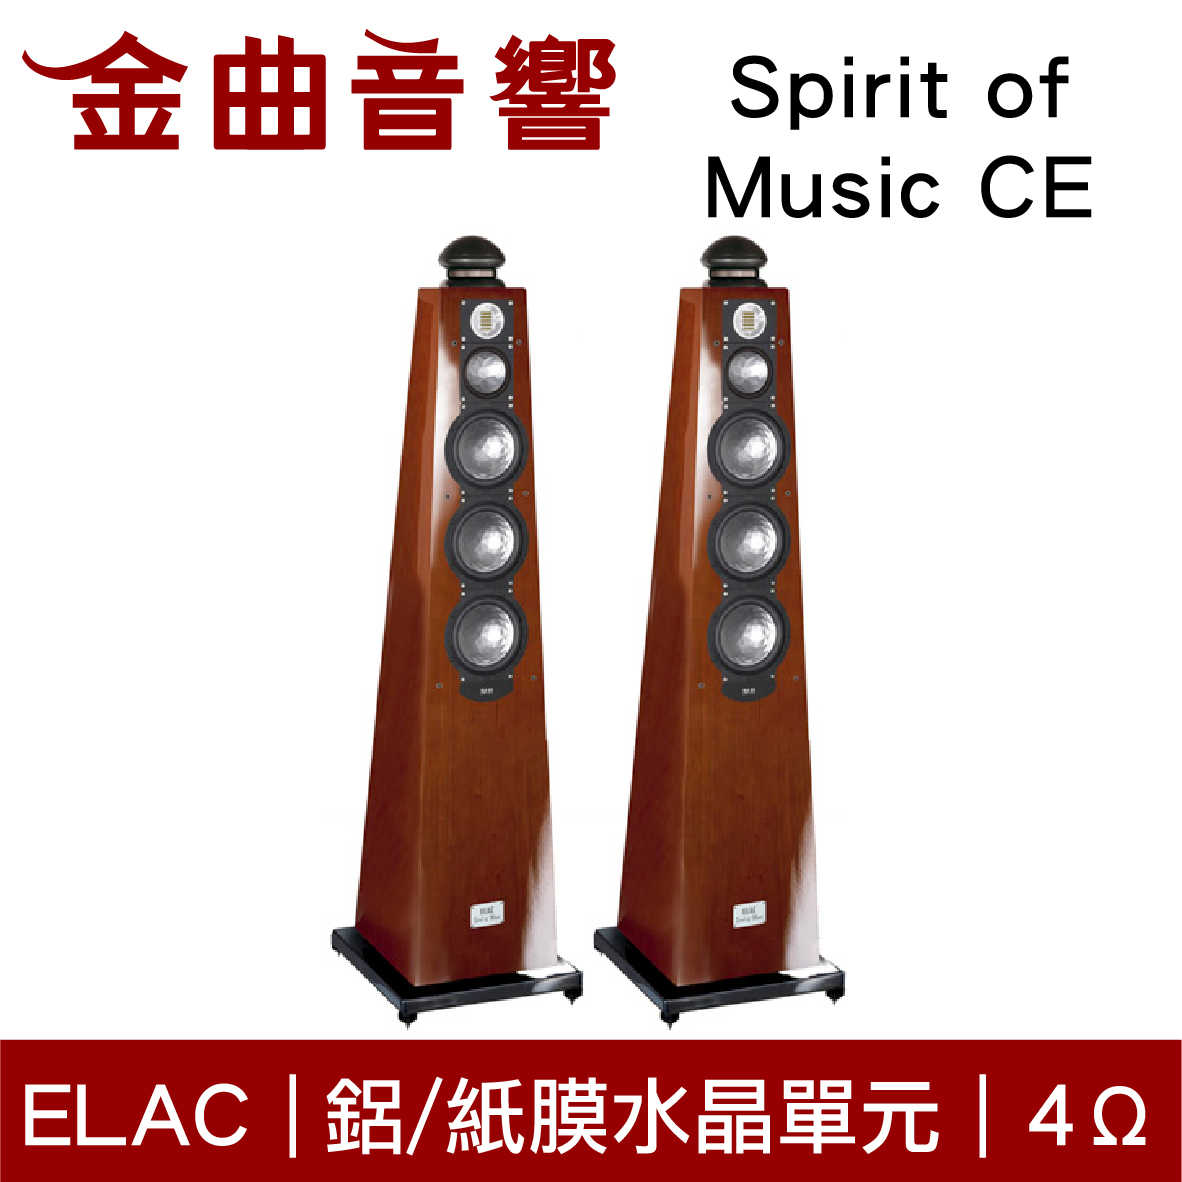 ELAC SPIRIT OF MUSIC CE 木紋色 水晶單元 落地型喇叭（一對）| 金曲音響